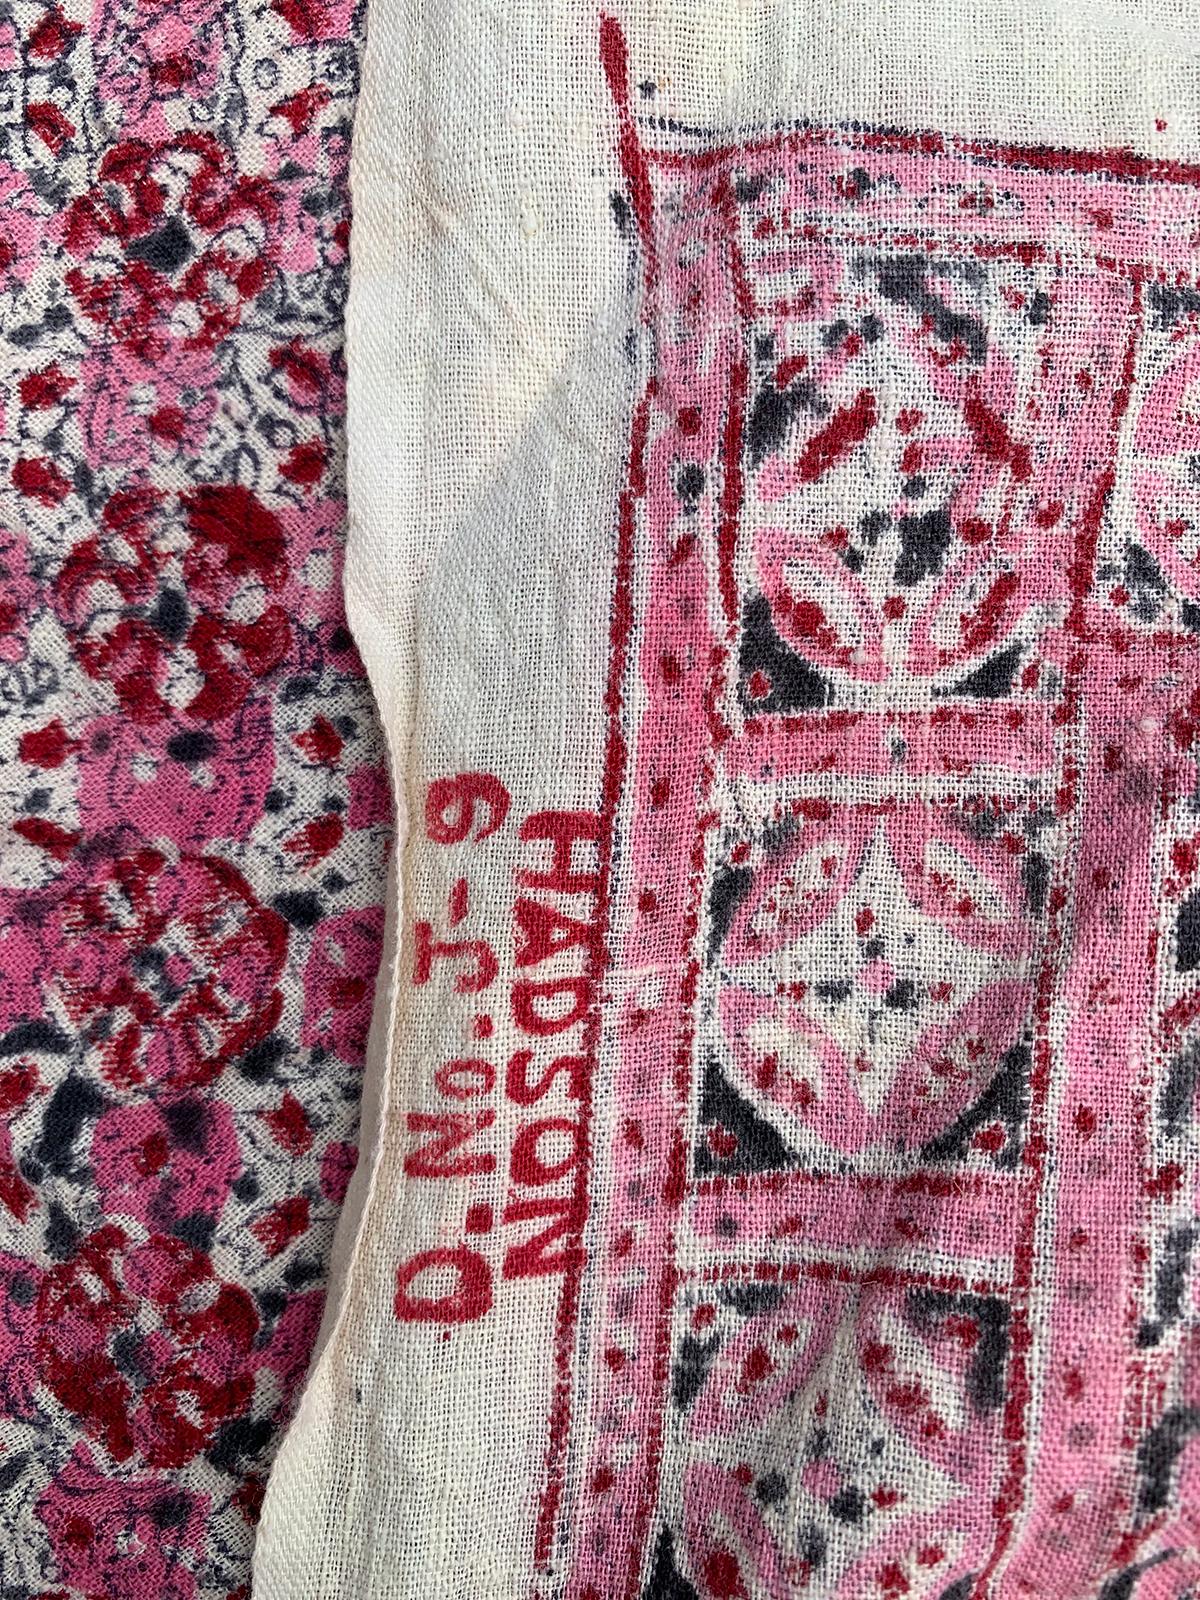 20th Century Indian Pink Lotus Mandala Fabric/Textile For Sale 4